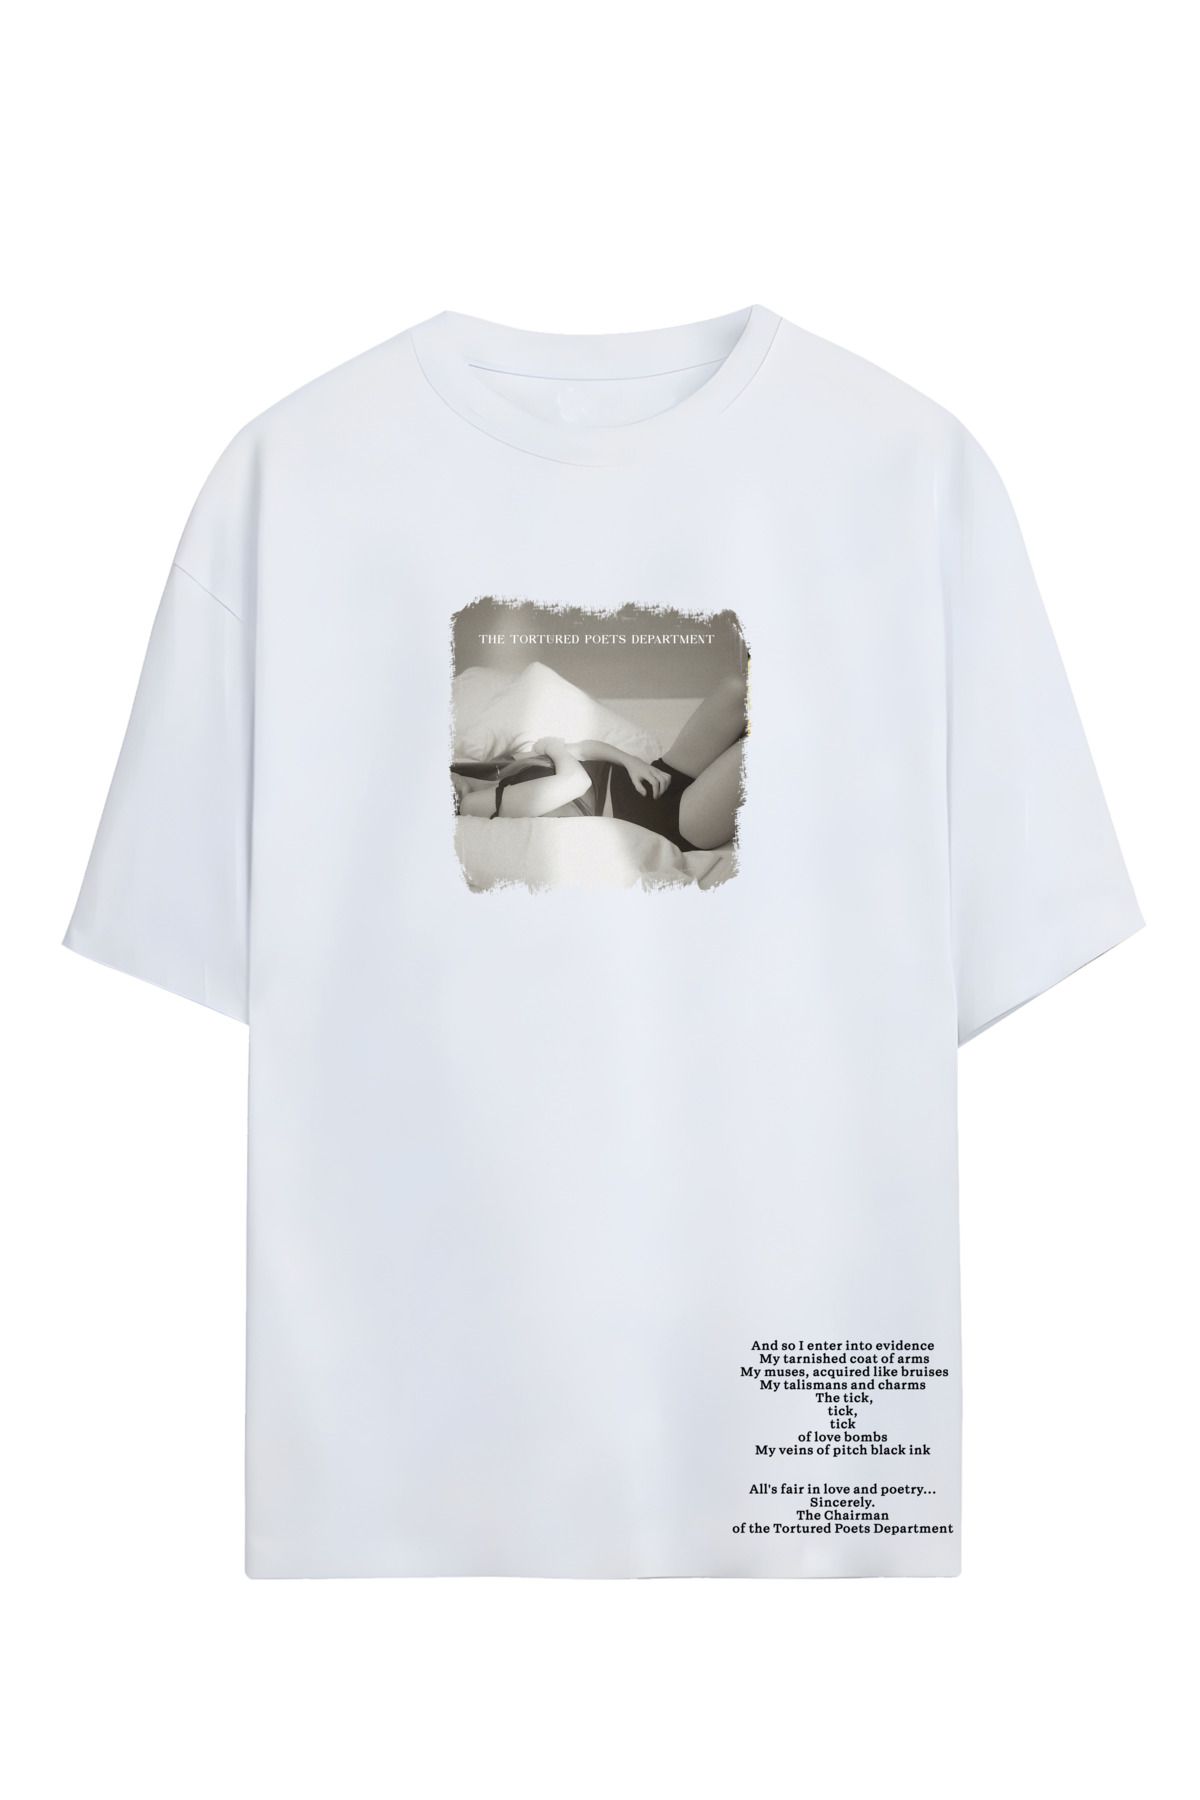 Adrift Taylor Swift - THE TORTURED POETS DEPARTMENT Tasarımlı Oversize T-shirt